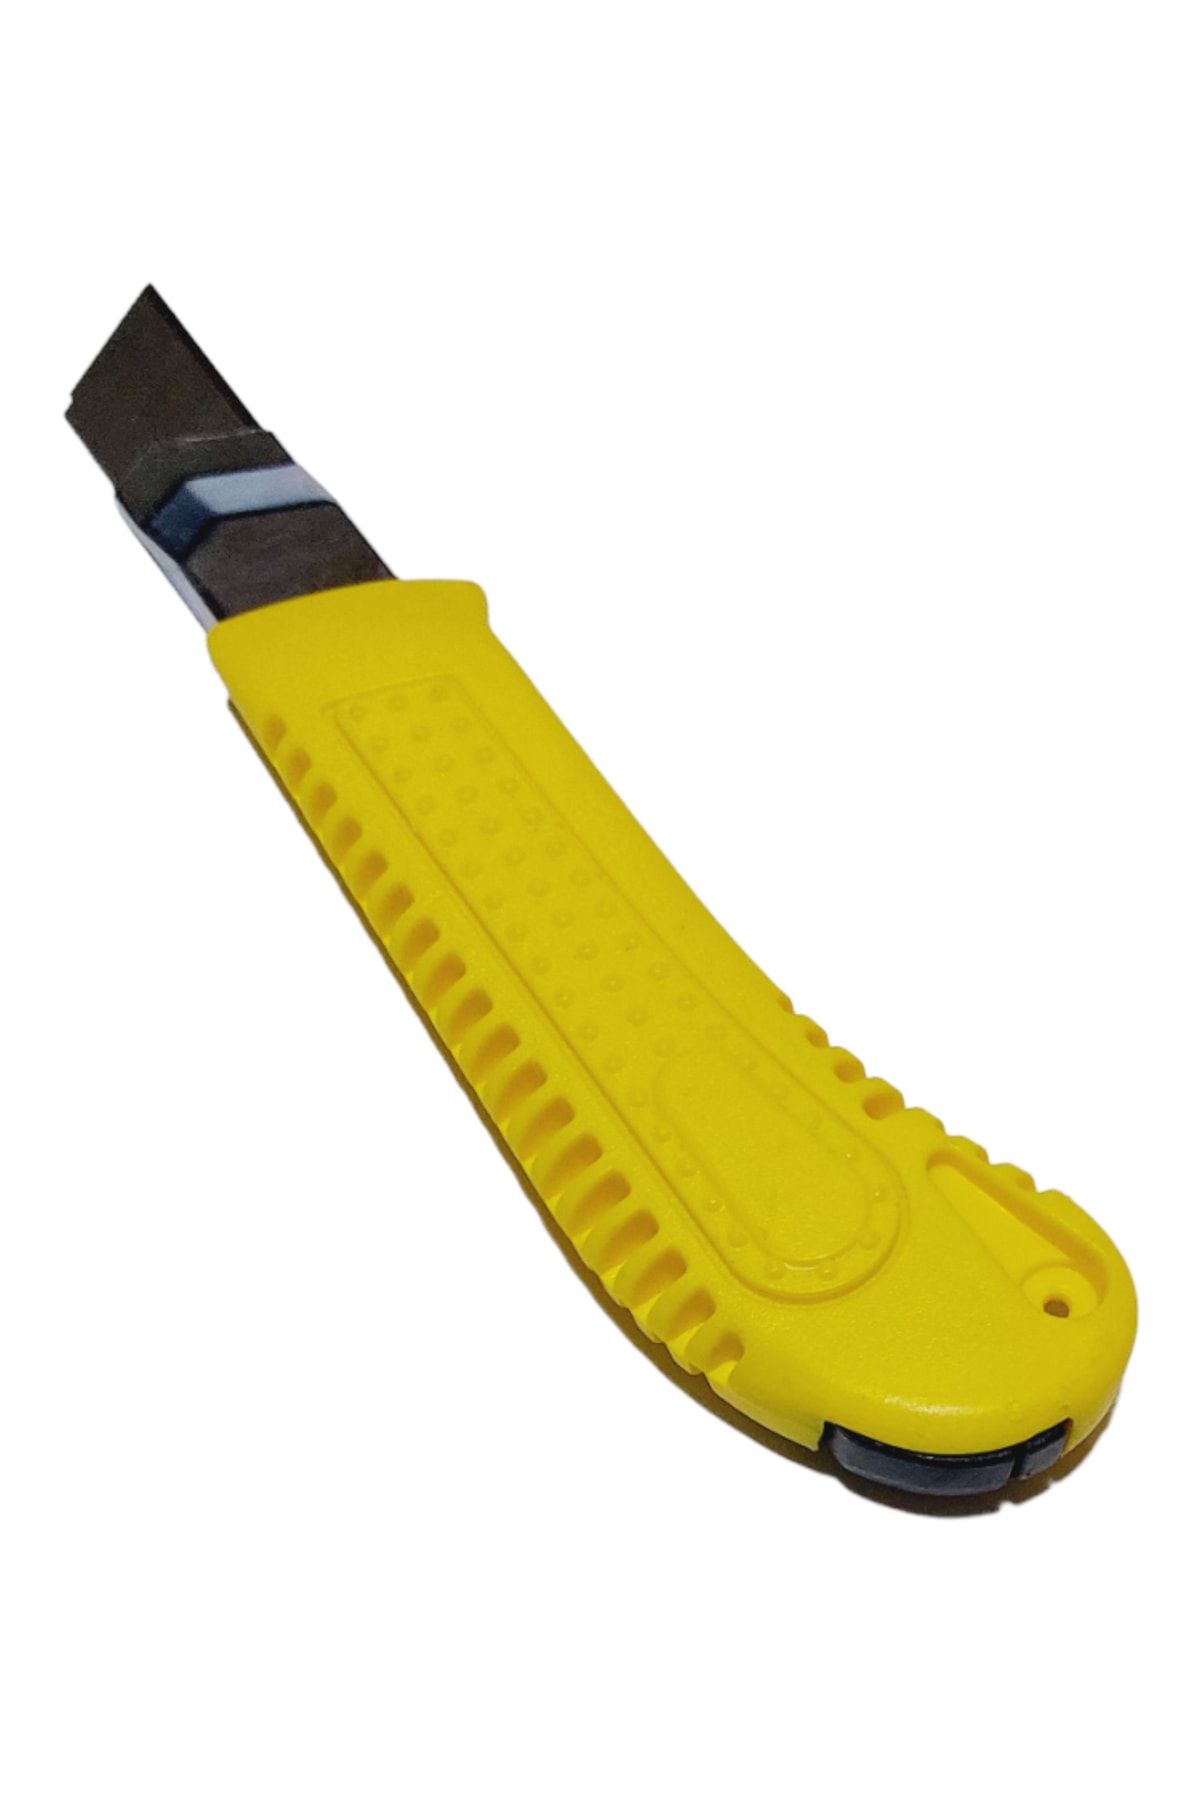 Umix Yüksek Kalite Metal Uçlu Sağlam Plastik Büyük Maket Bıçağı Sarı